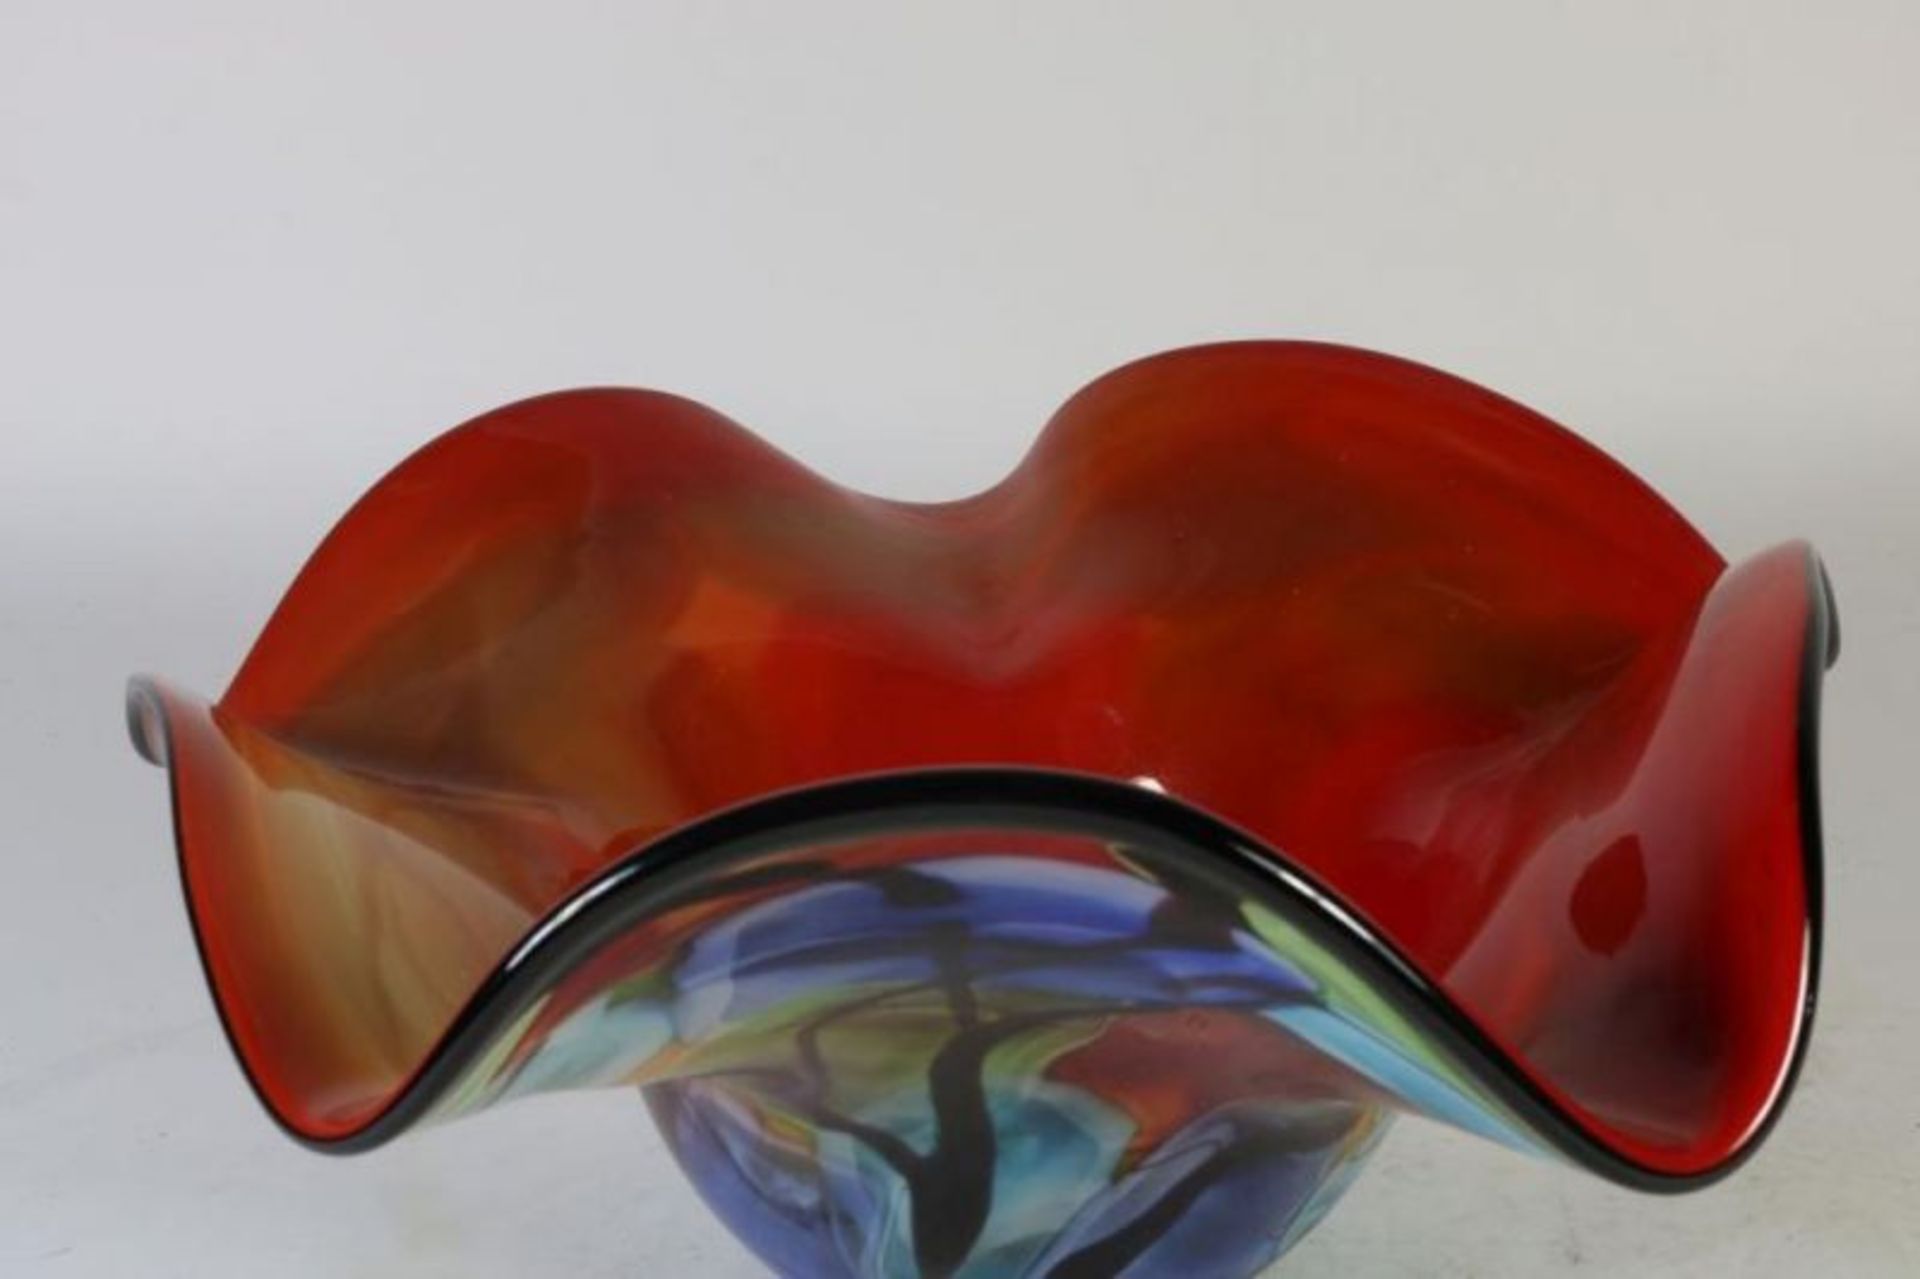 Polychroom dik glazen fruitschaal, h. 20 cm. diam. 43 cm. Polychrome glass fruit bowl, h. 20 cm. - Bild 2 aus 3